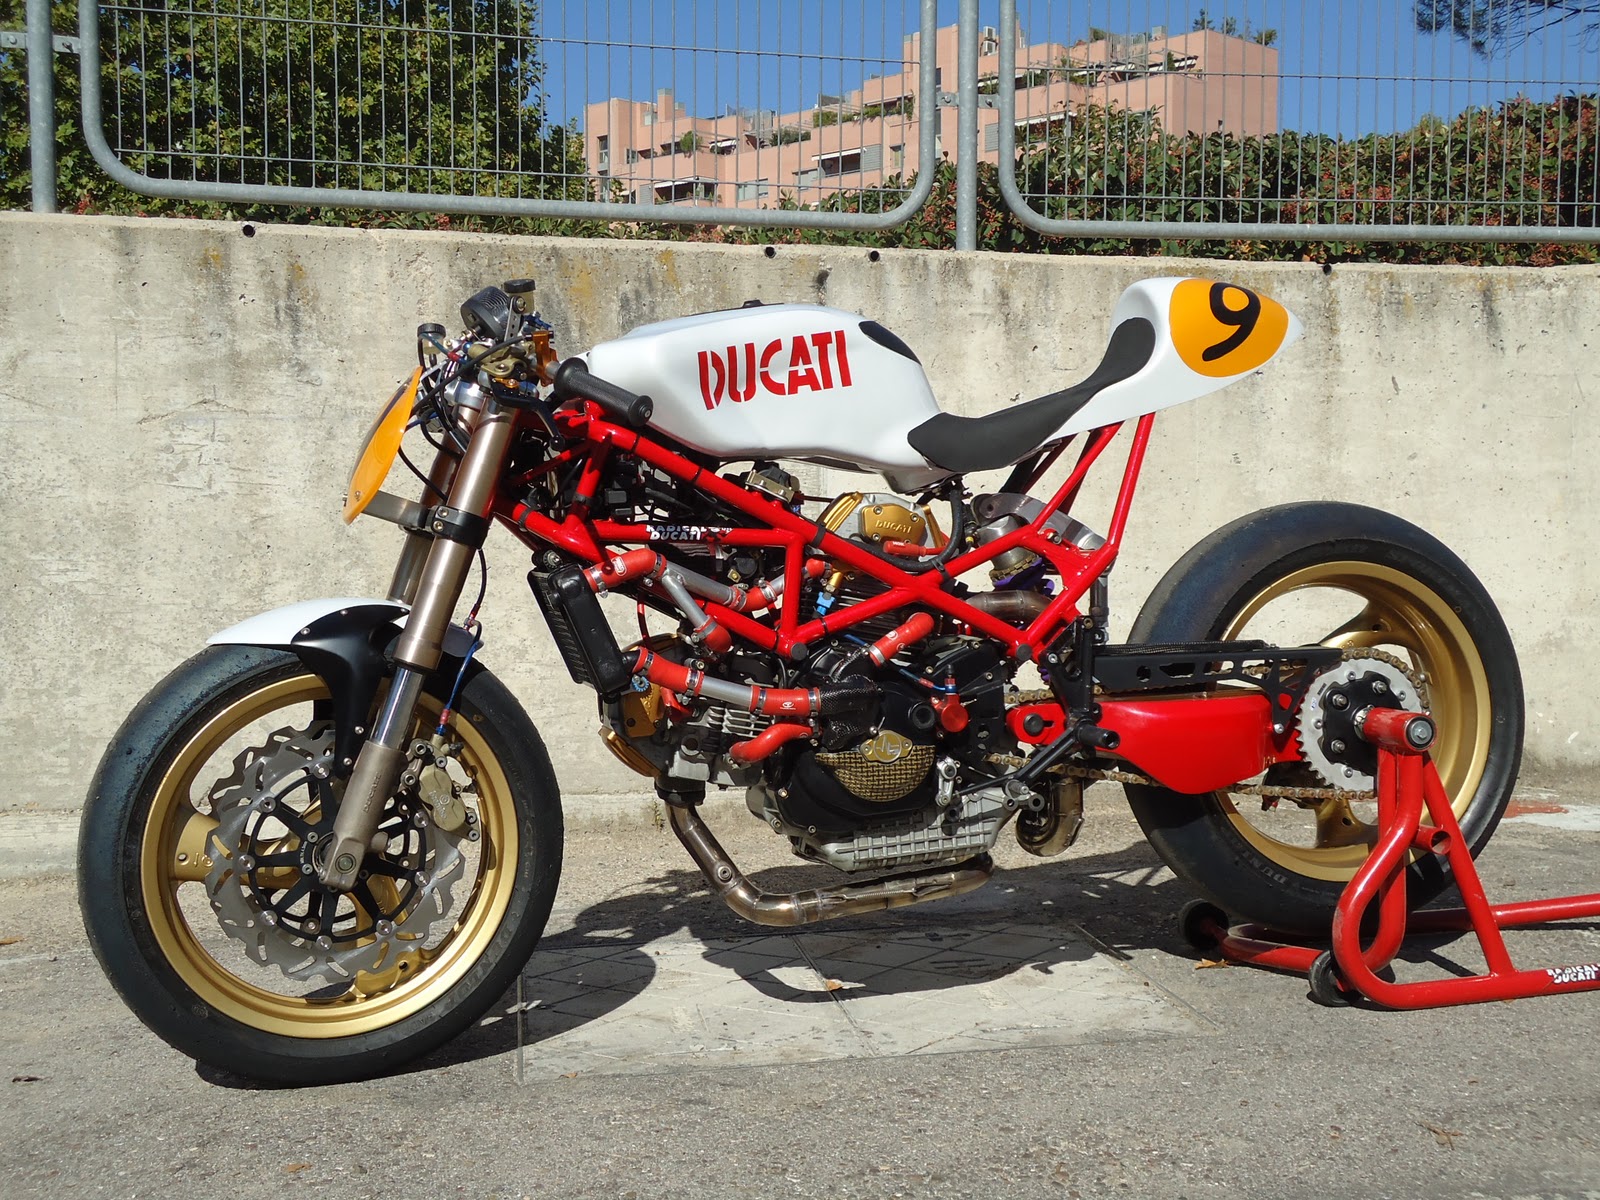 Radical Ducati 9 Asphalt Rubber